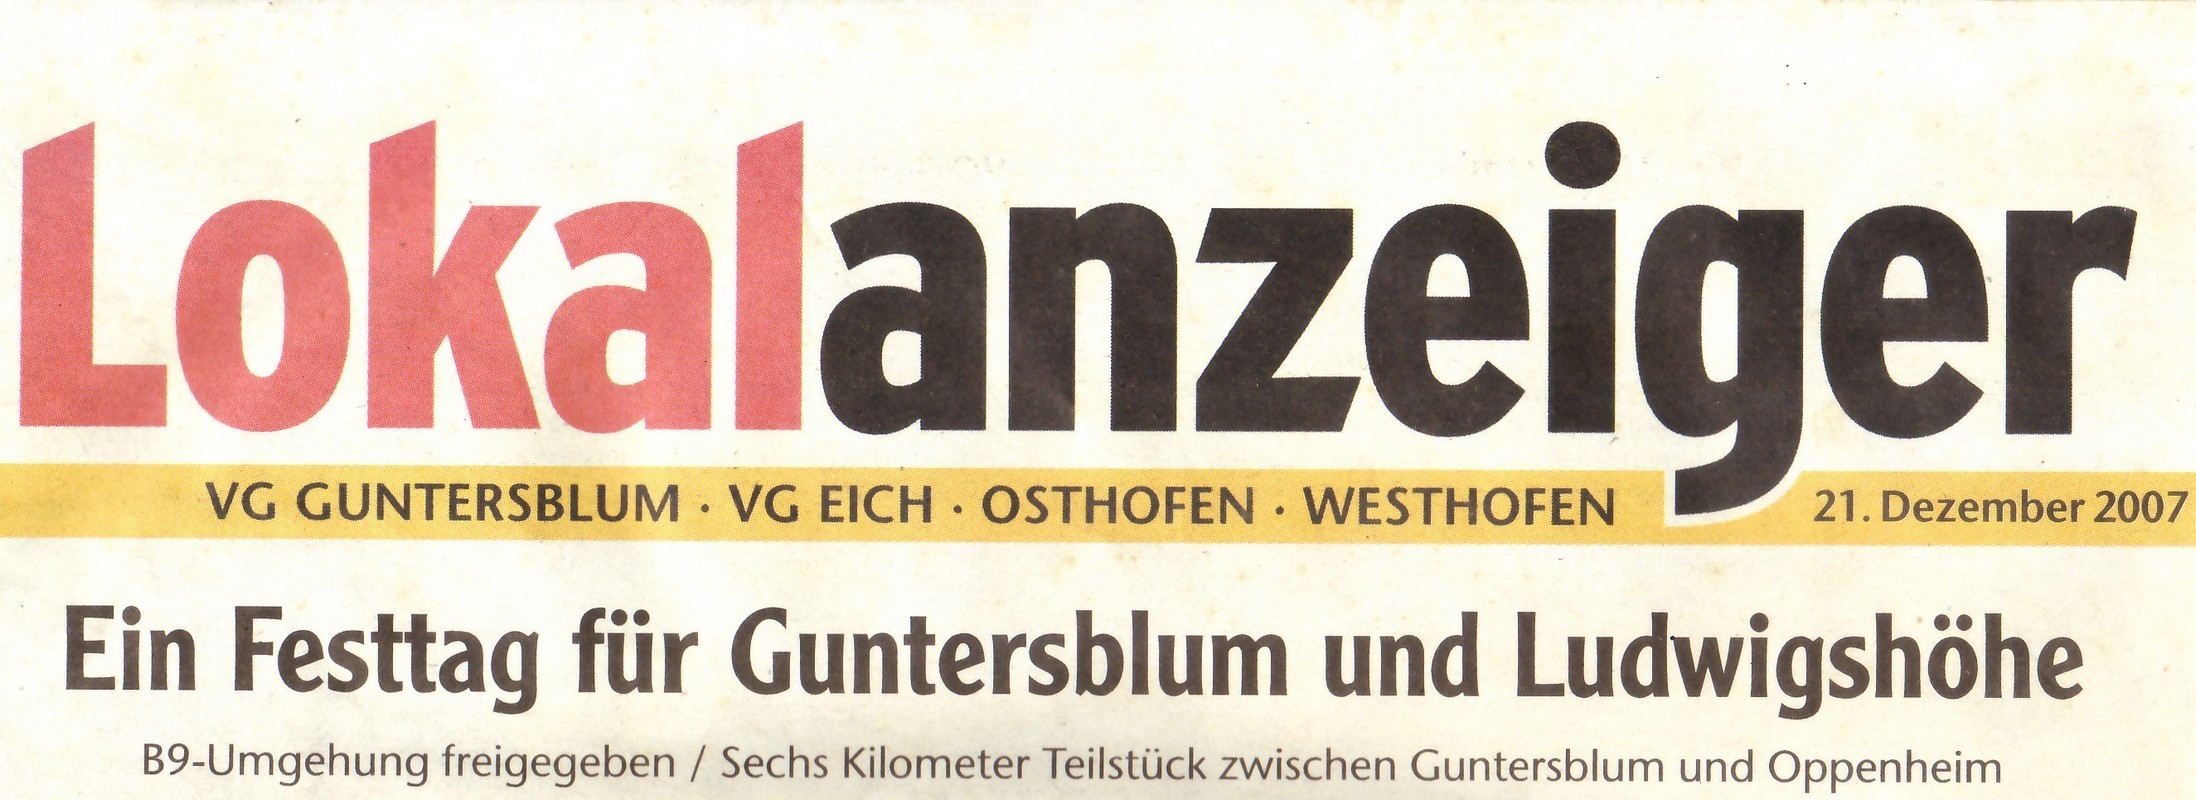 Lokalanzeiger VG Guntersblum - VG Eich - Osthofen - Westhofen (Museum Guntersblum CC BY-NC-SA)